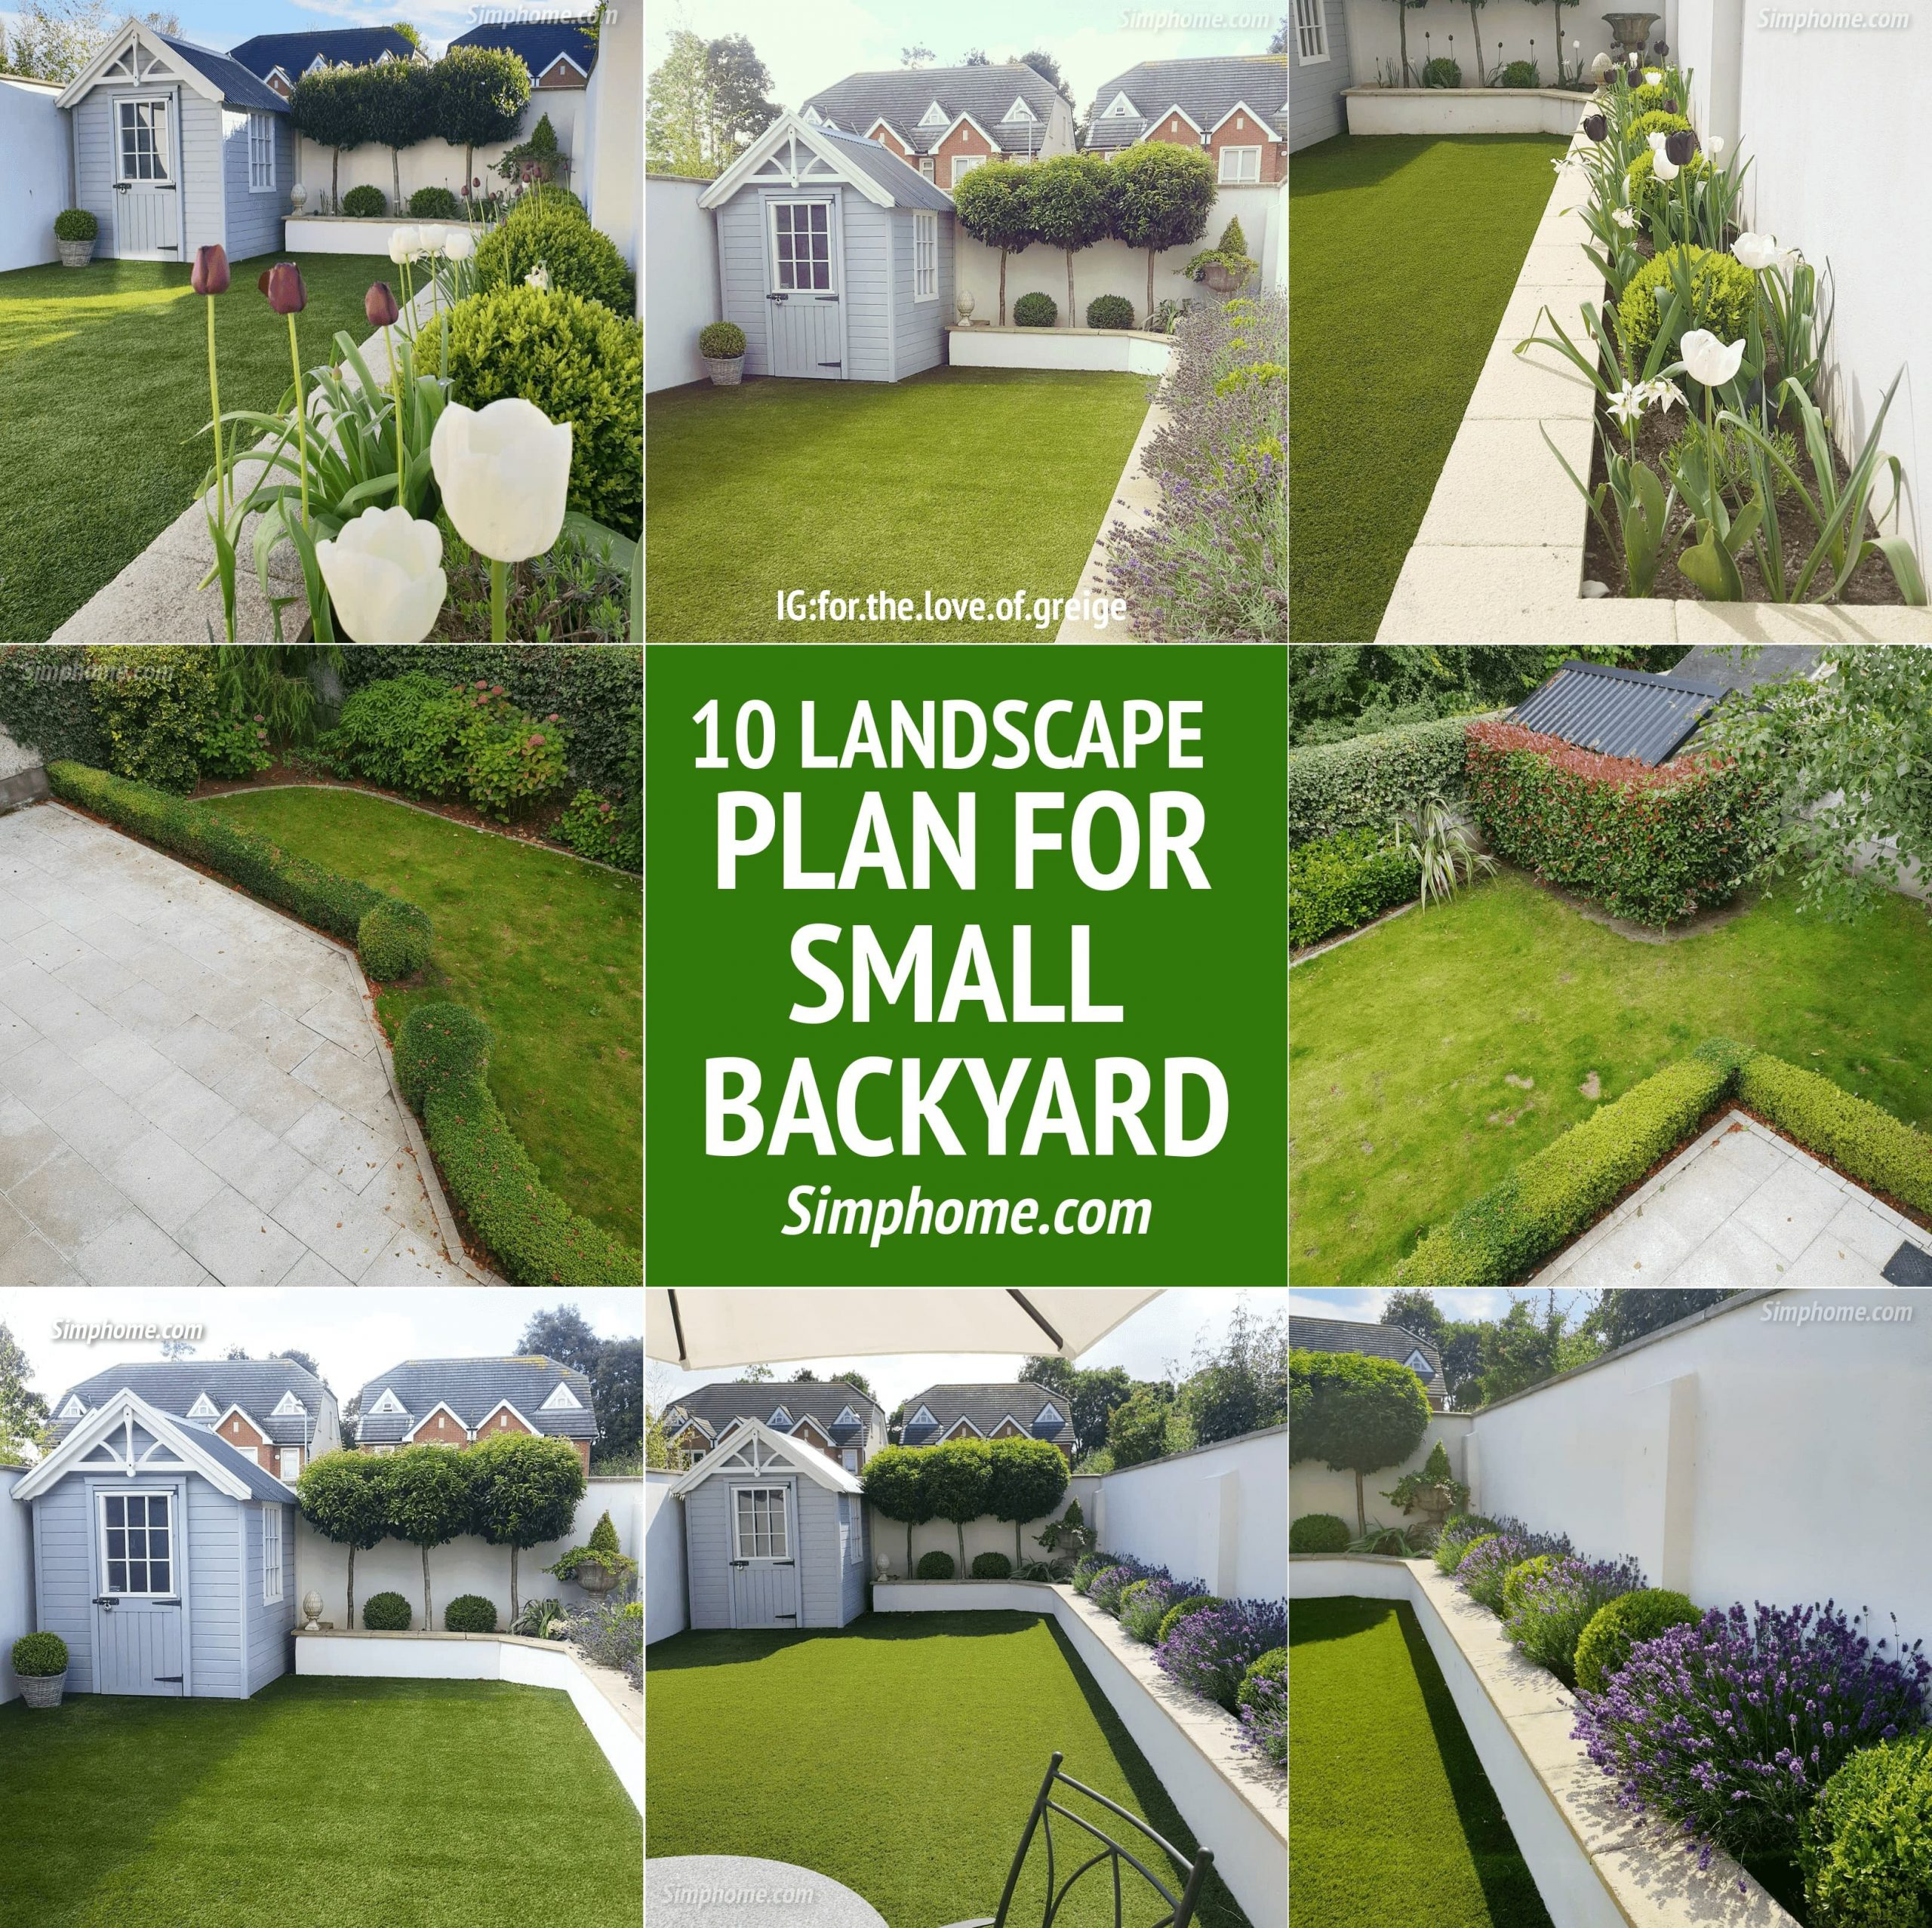 SIMPHOME.COM 10 Landscape Plan for Small Backyard